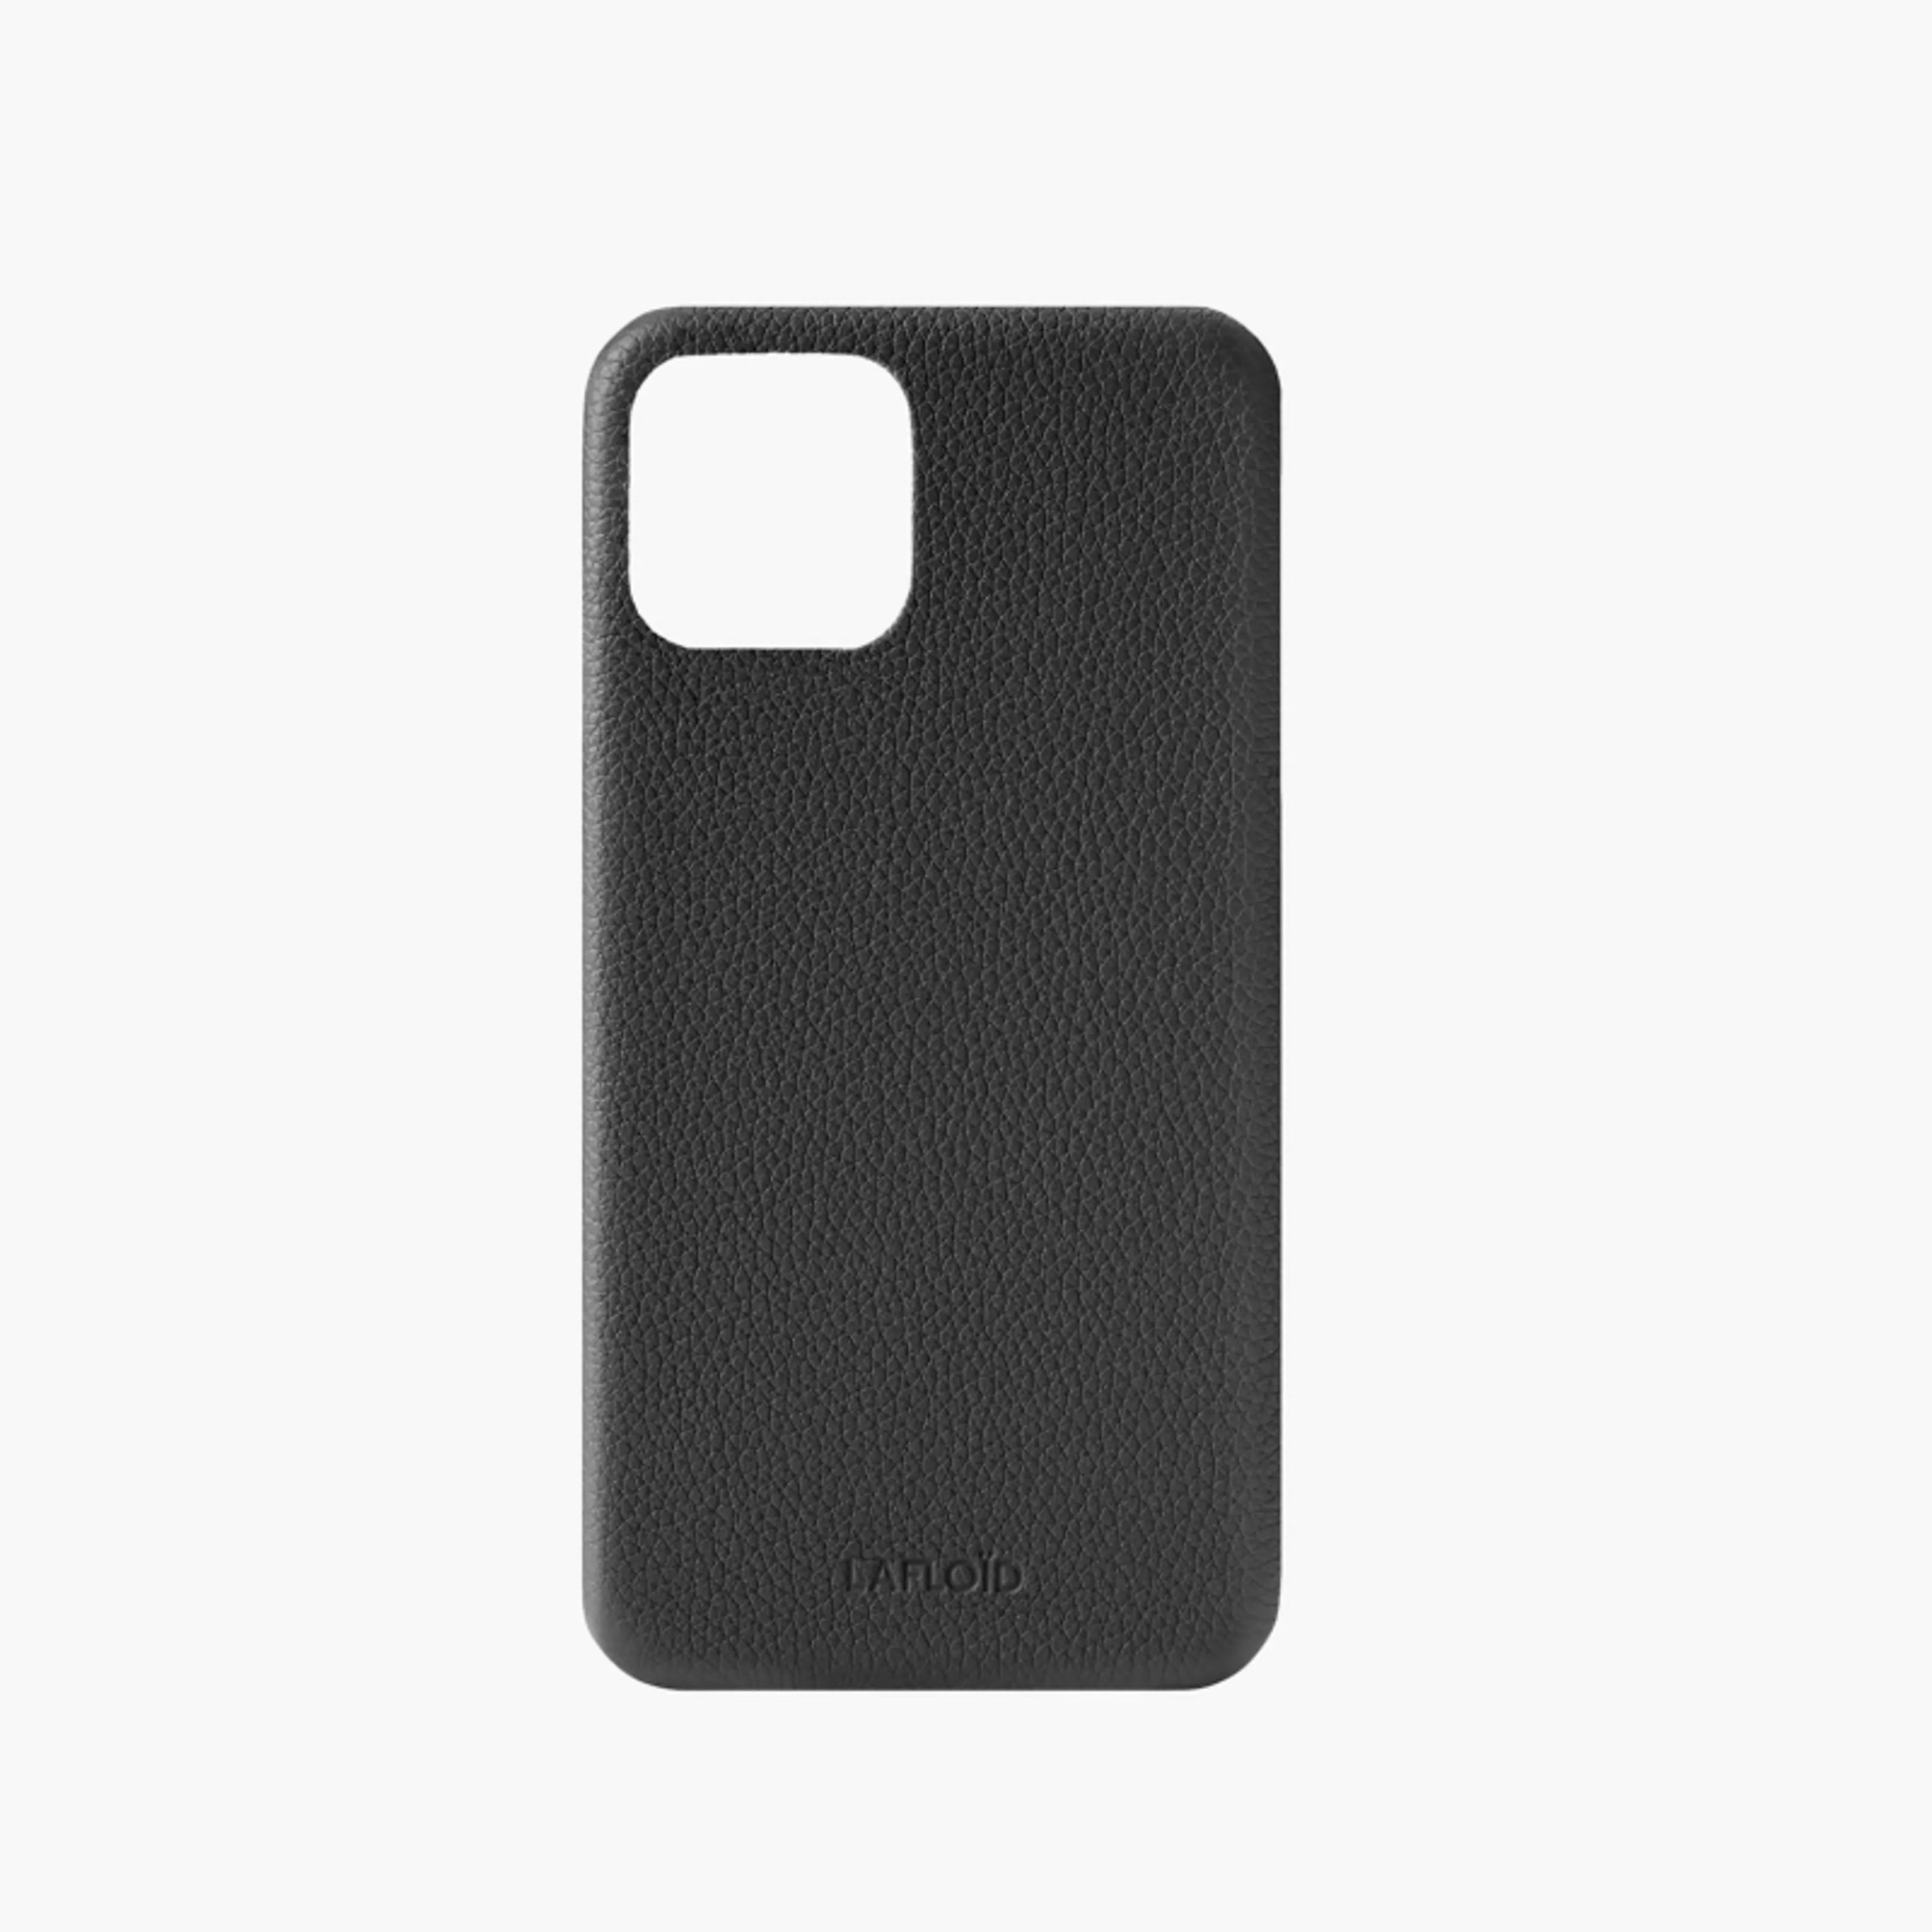 Iphone 12 mini case Stone